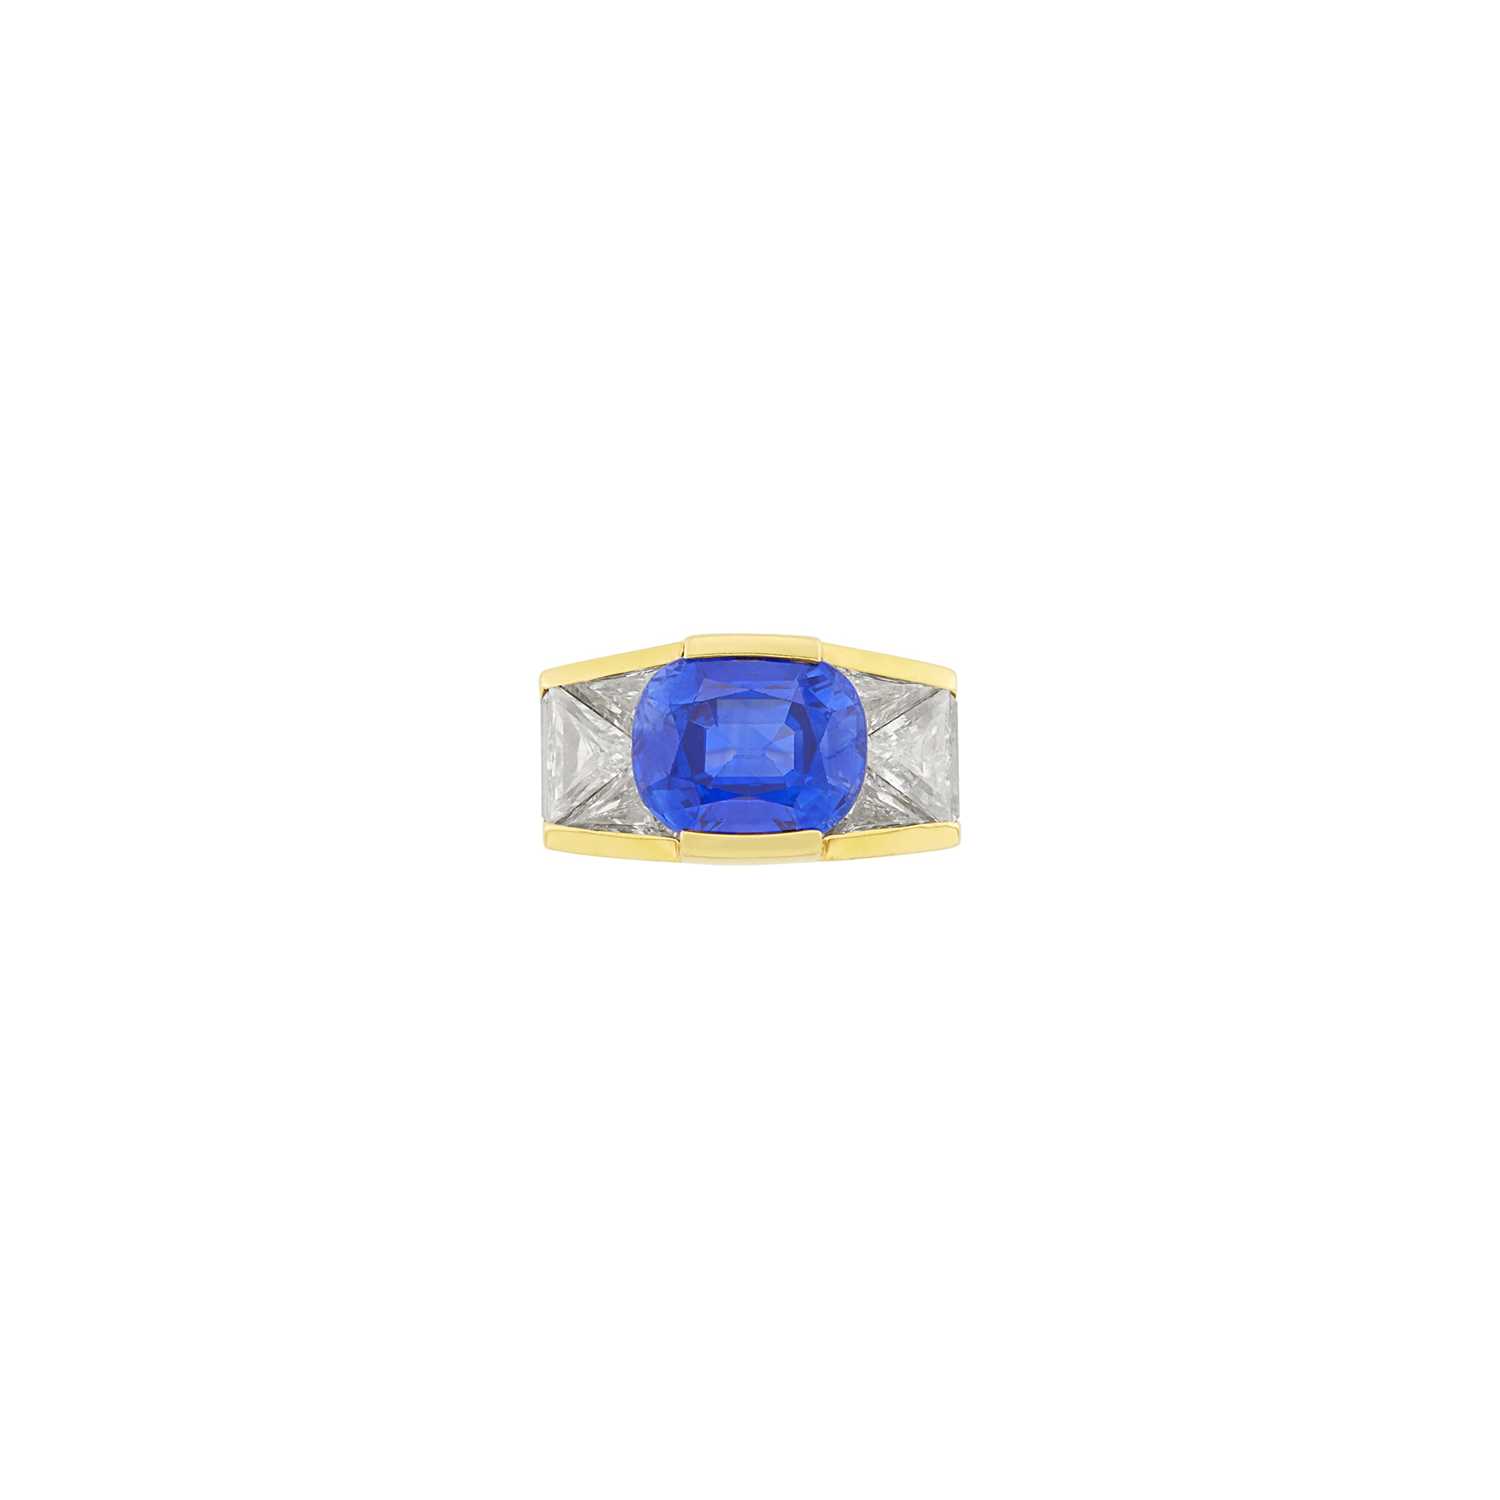 Lot 158 - Bulgari Gold, Platinum, Kashmir Sapphire and Diamond Ring